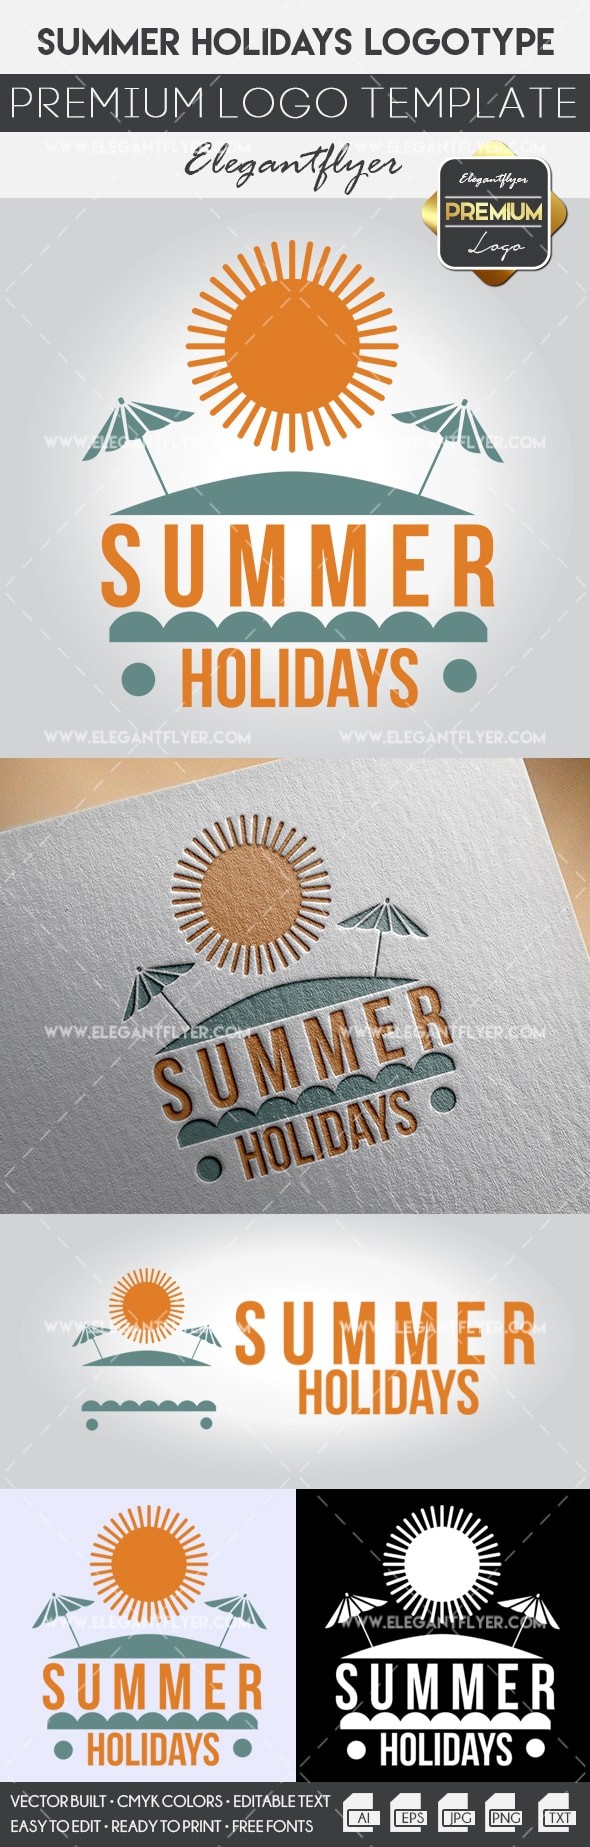 Summer Holidays by ElegantFlyer